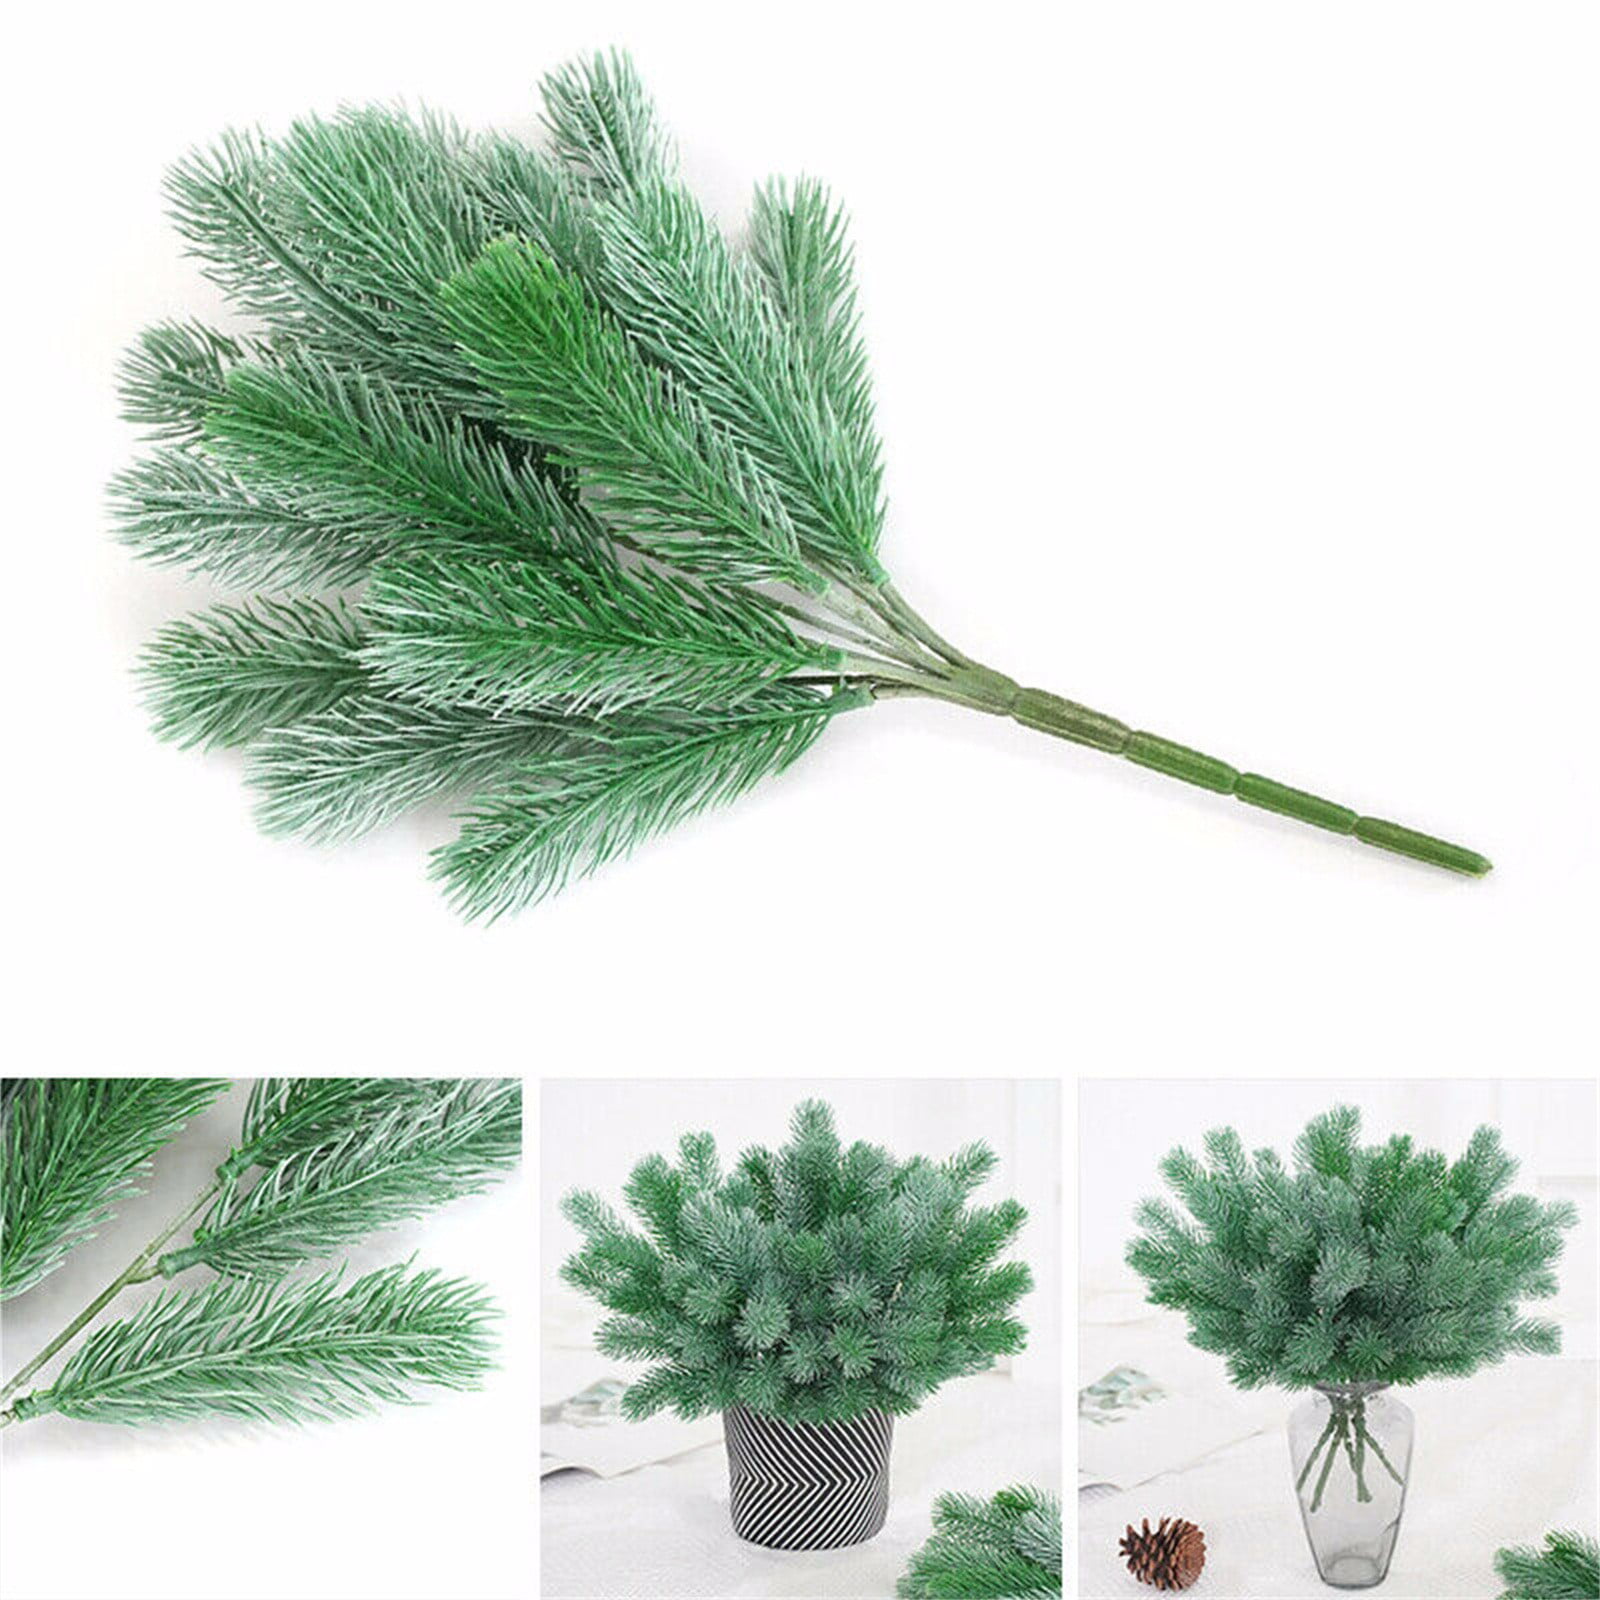 Artificial Pine Needle Branch Christmas Fern Grass Green Plants Xmas Party Decor 